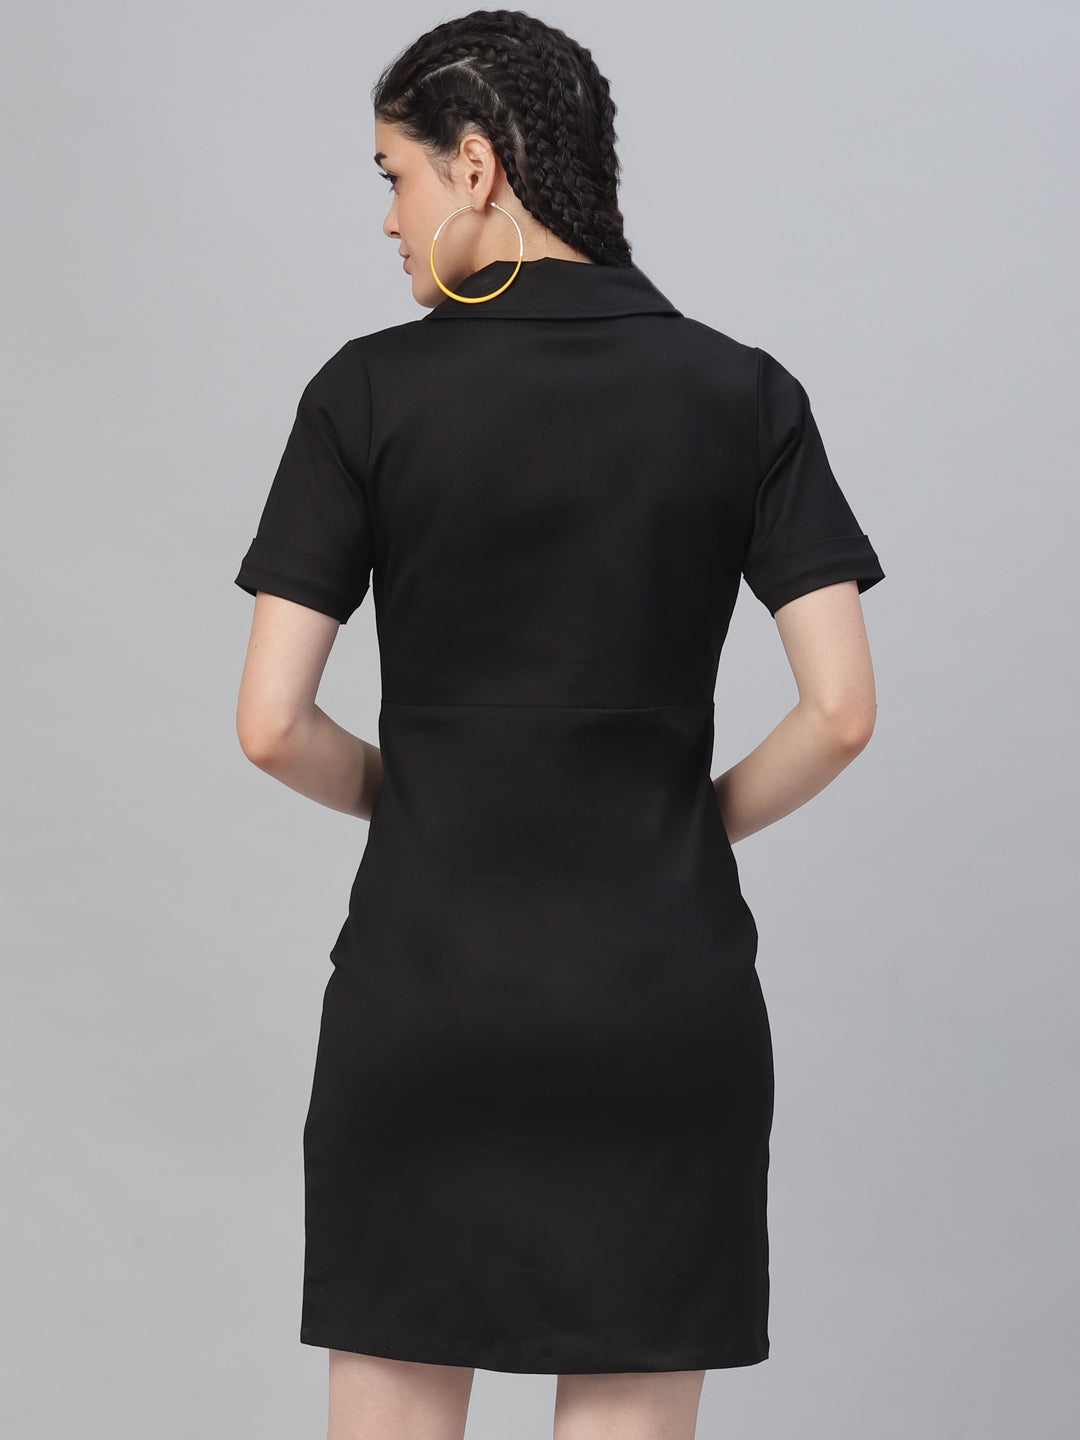 Athena Women Black Solid Denim Shirt Dress - Athena Lifestyle